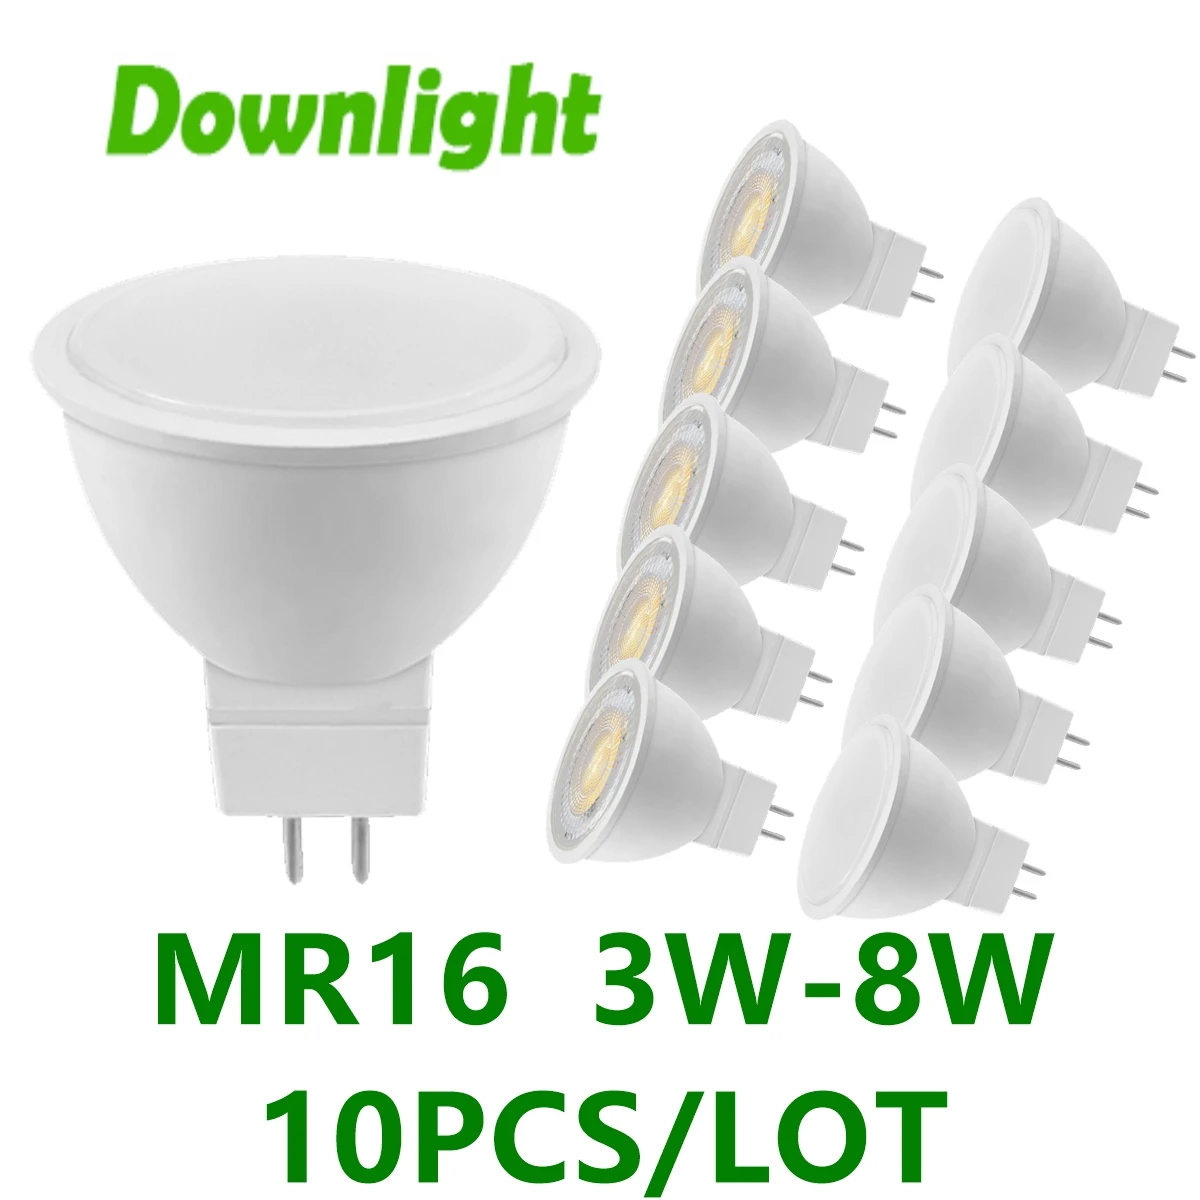 10PCS LED spotlight in-line GU5.3 Full voltage AC/DC12V/AC110V/AC220V MR16 No flicker warm white light 3W-8W suitable for study